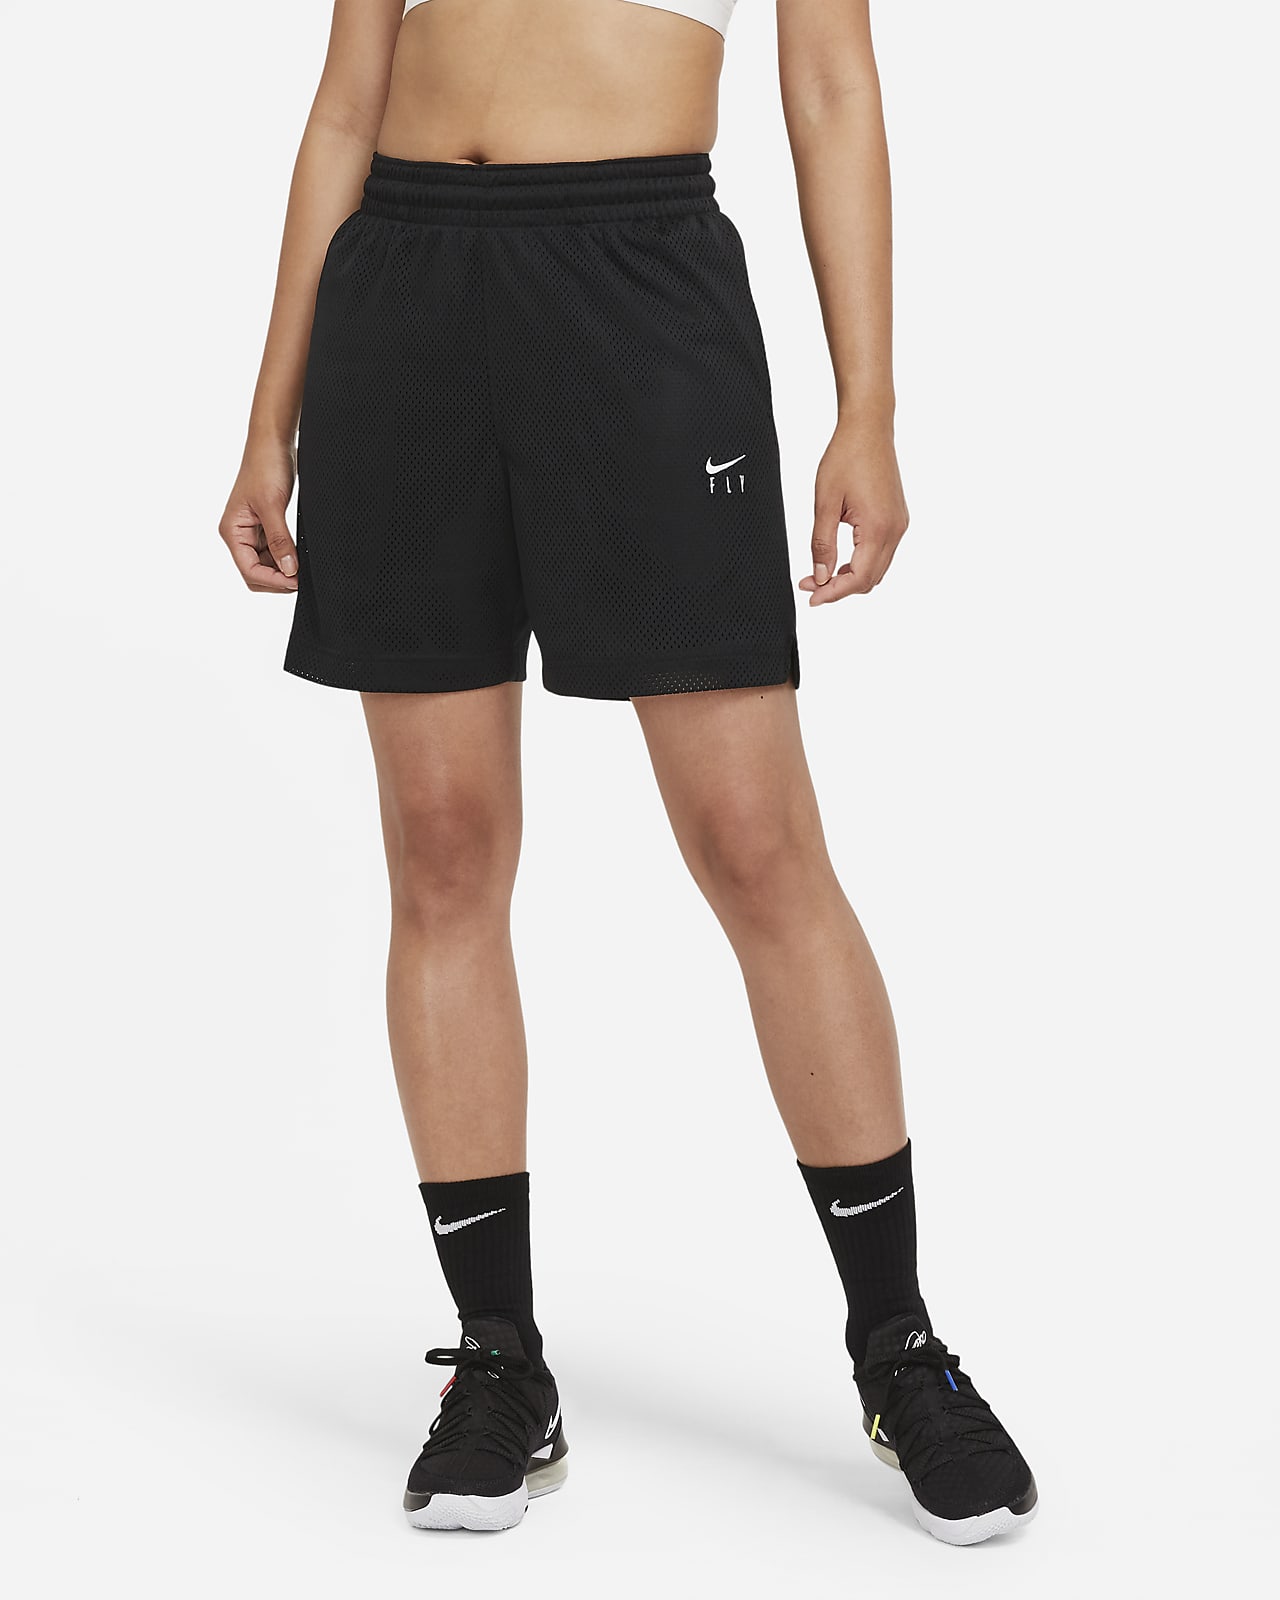 Nike Fly Women's Basketball Shorts. Nike IN